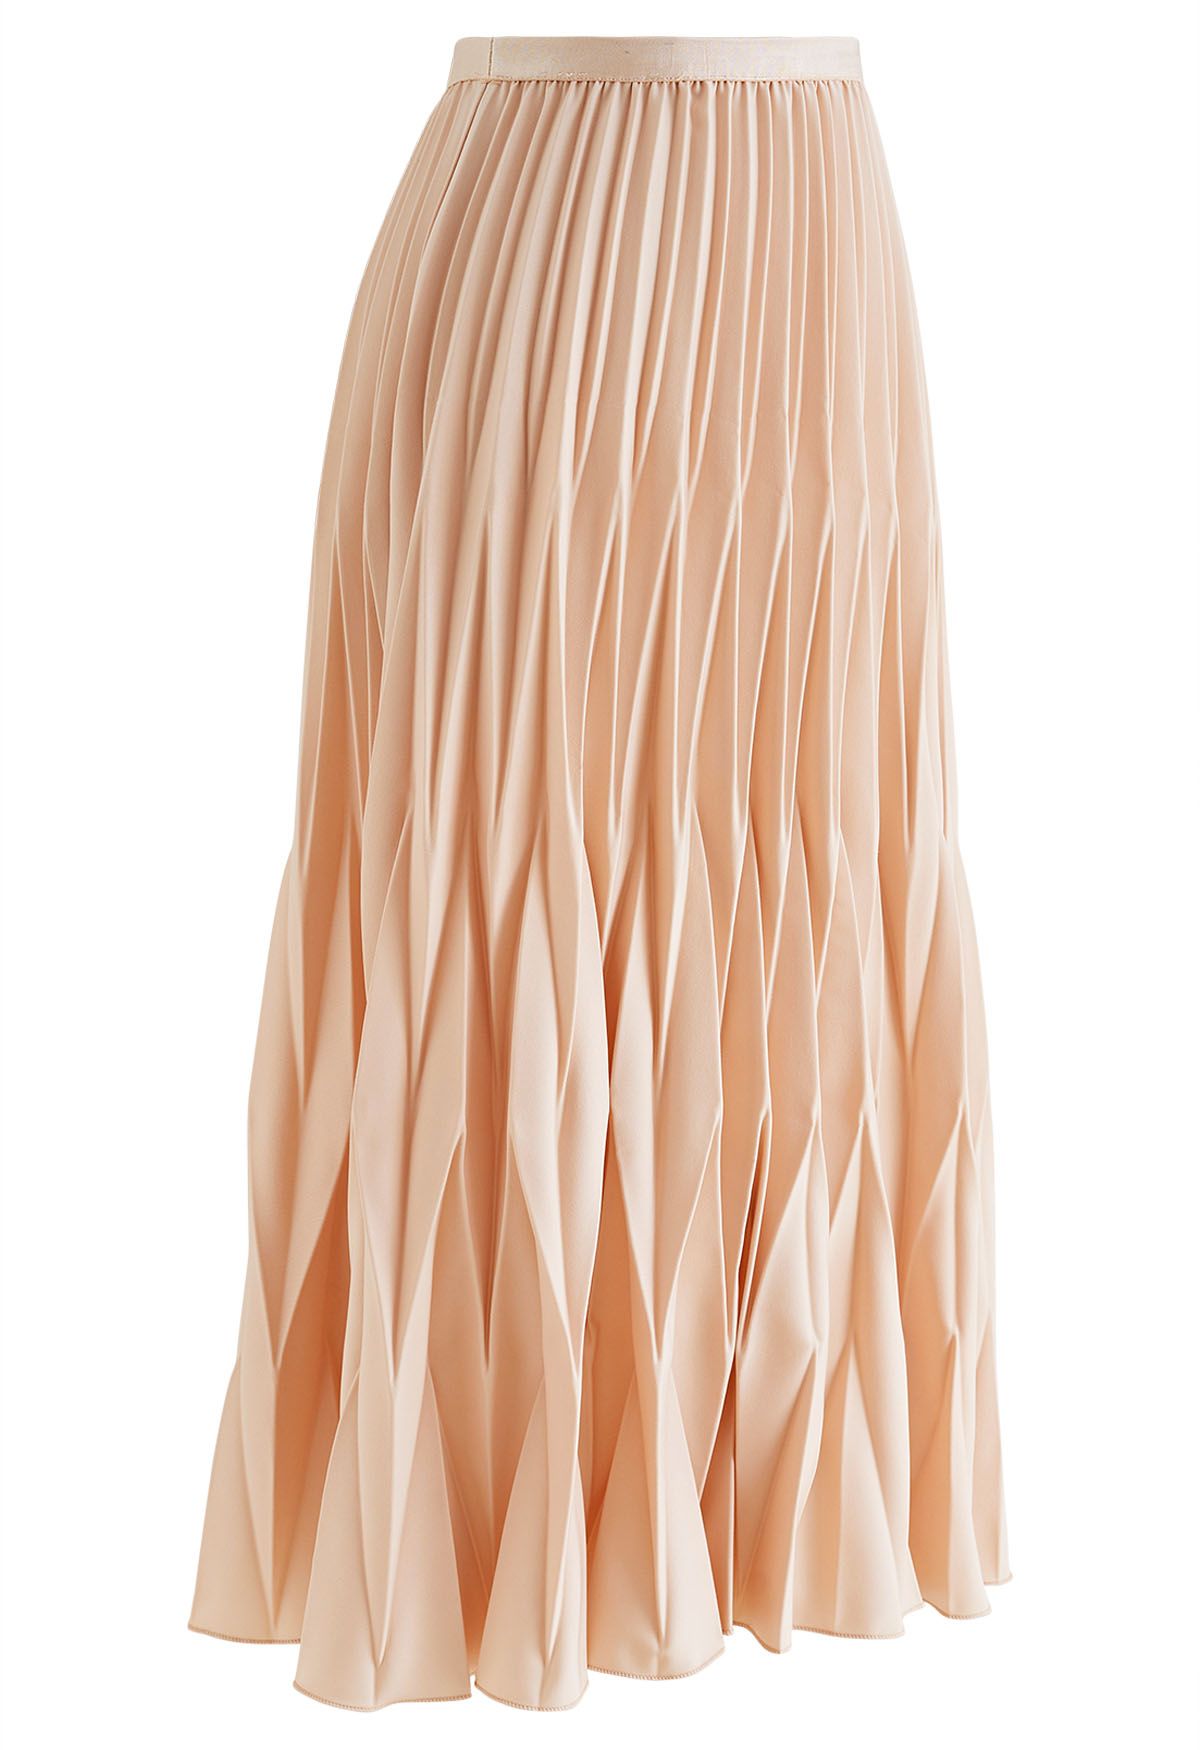 Irregular Pleated Midi Skirt in Apricot